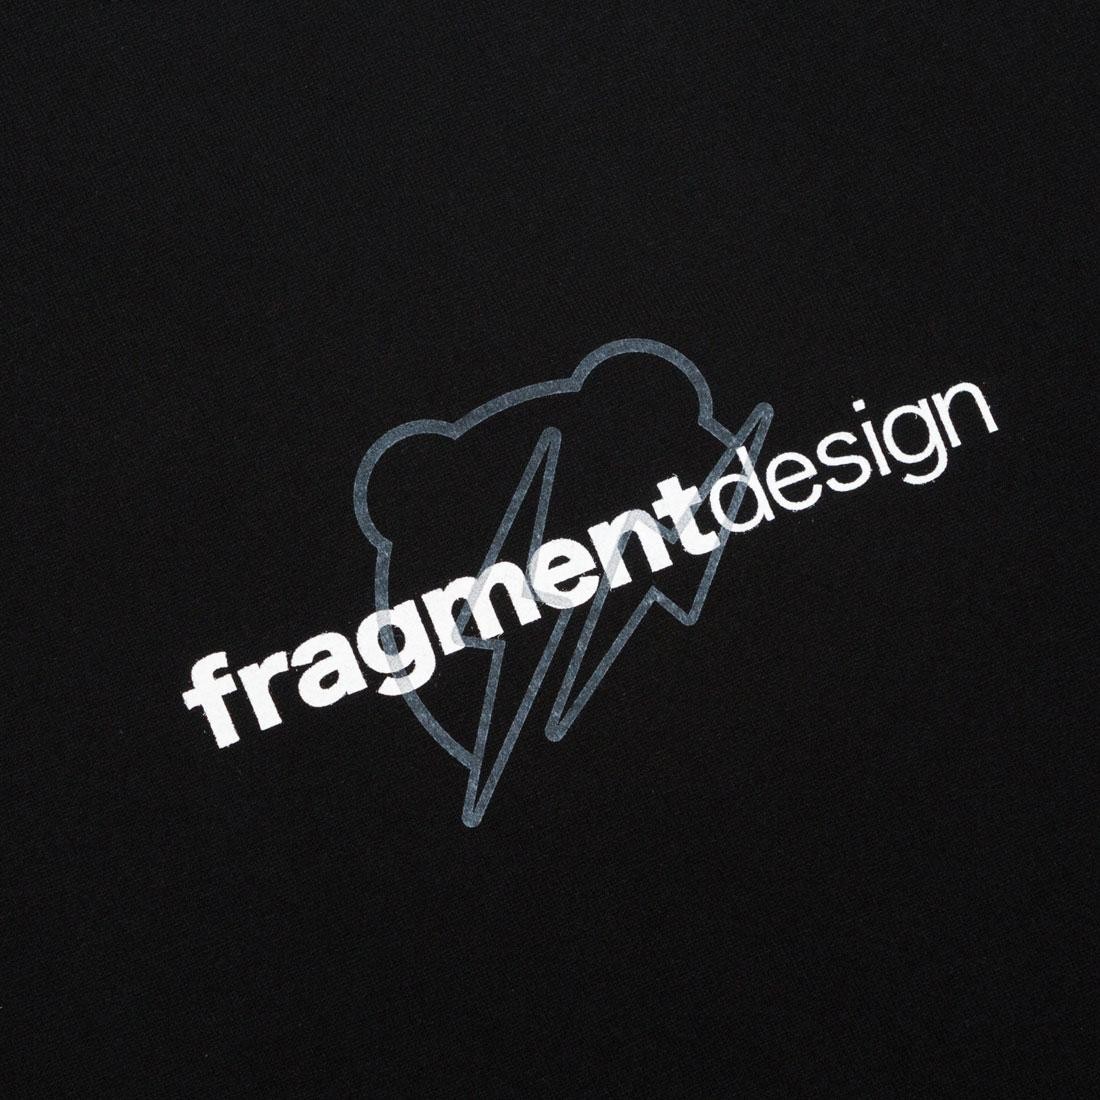 BE@RTEE fragmentdesign 2020 LOGO T-Shirt [WHITE] by Medicom Toy - Mindzai